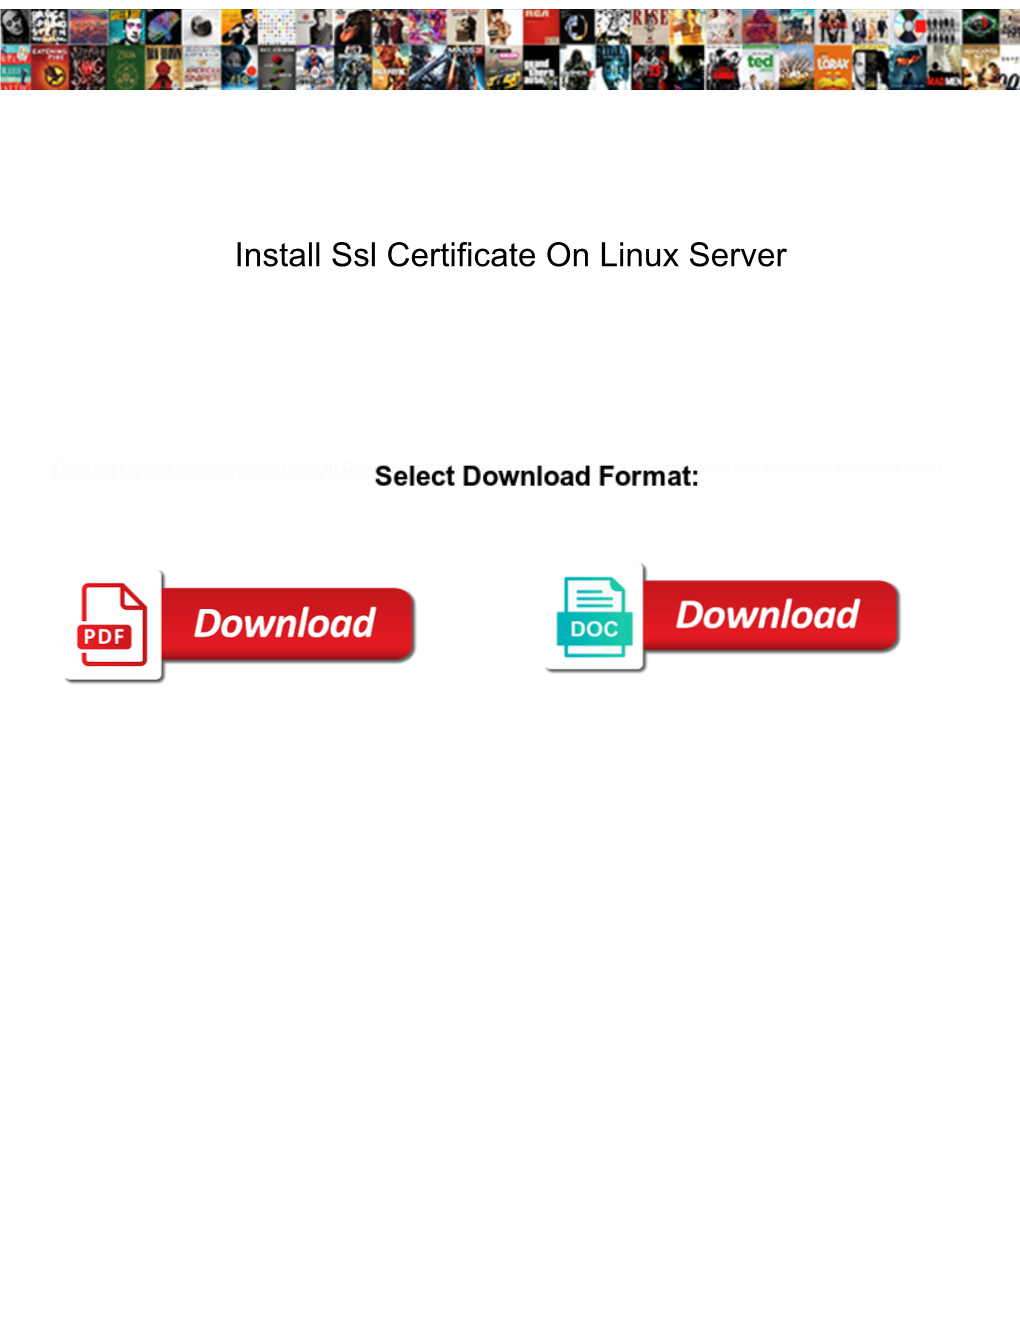 Install Ssl Certificate on Linux Server